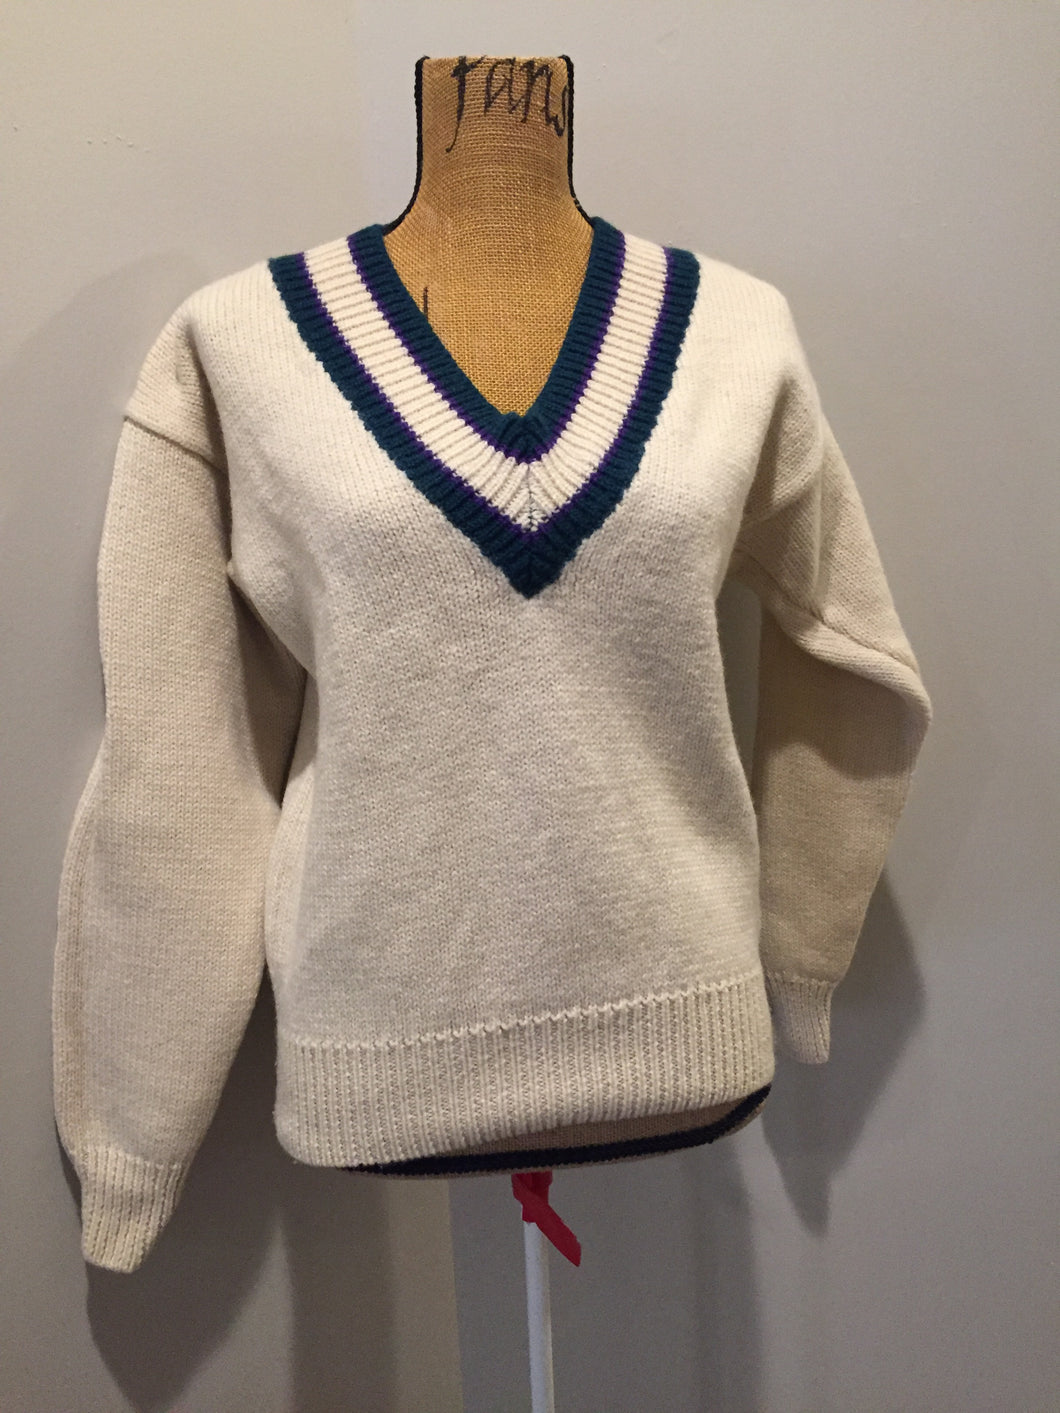 Kingspier Vintage - Vintage “Gant” sweater in cream, green and purple. Size medium. 